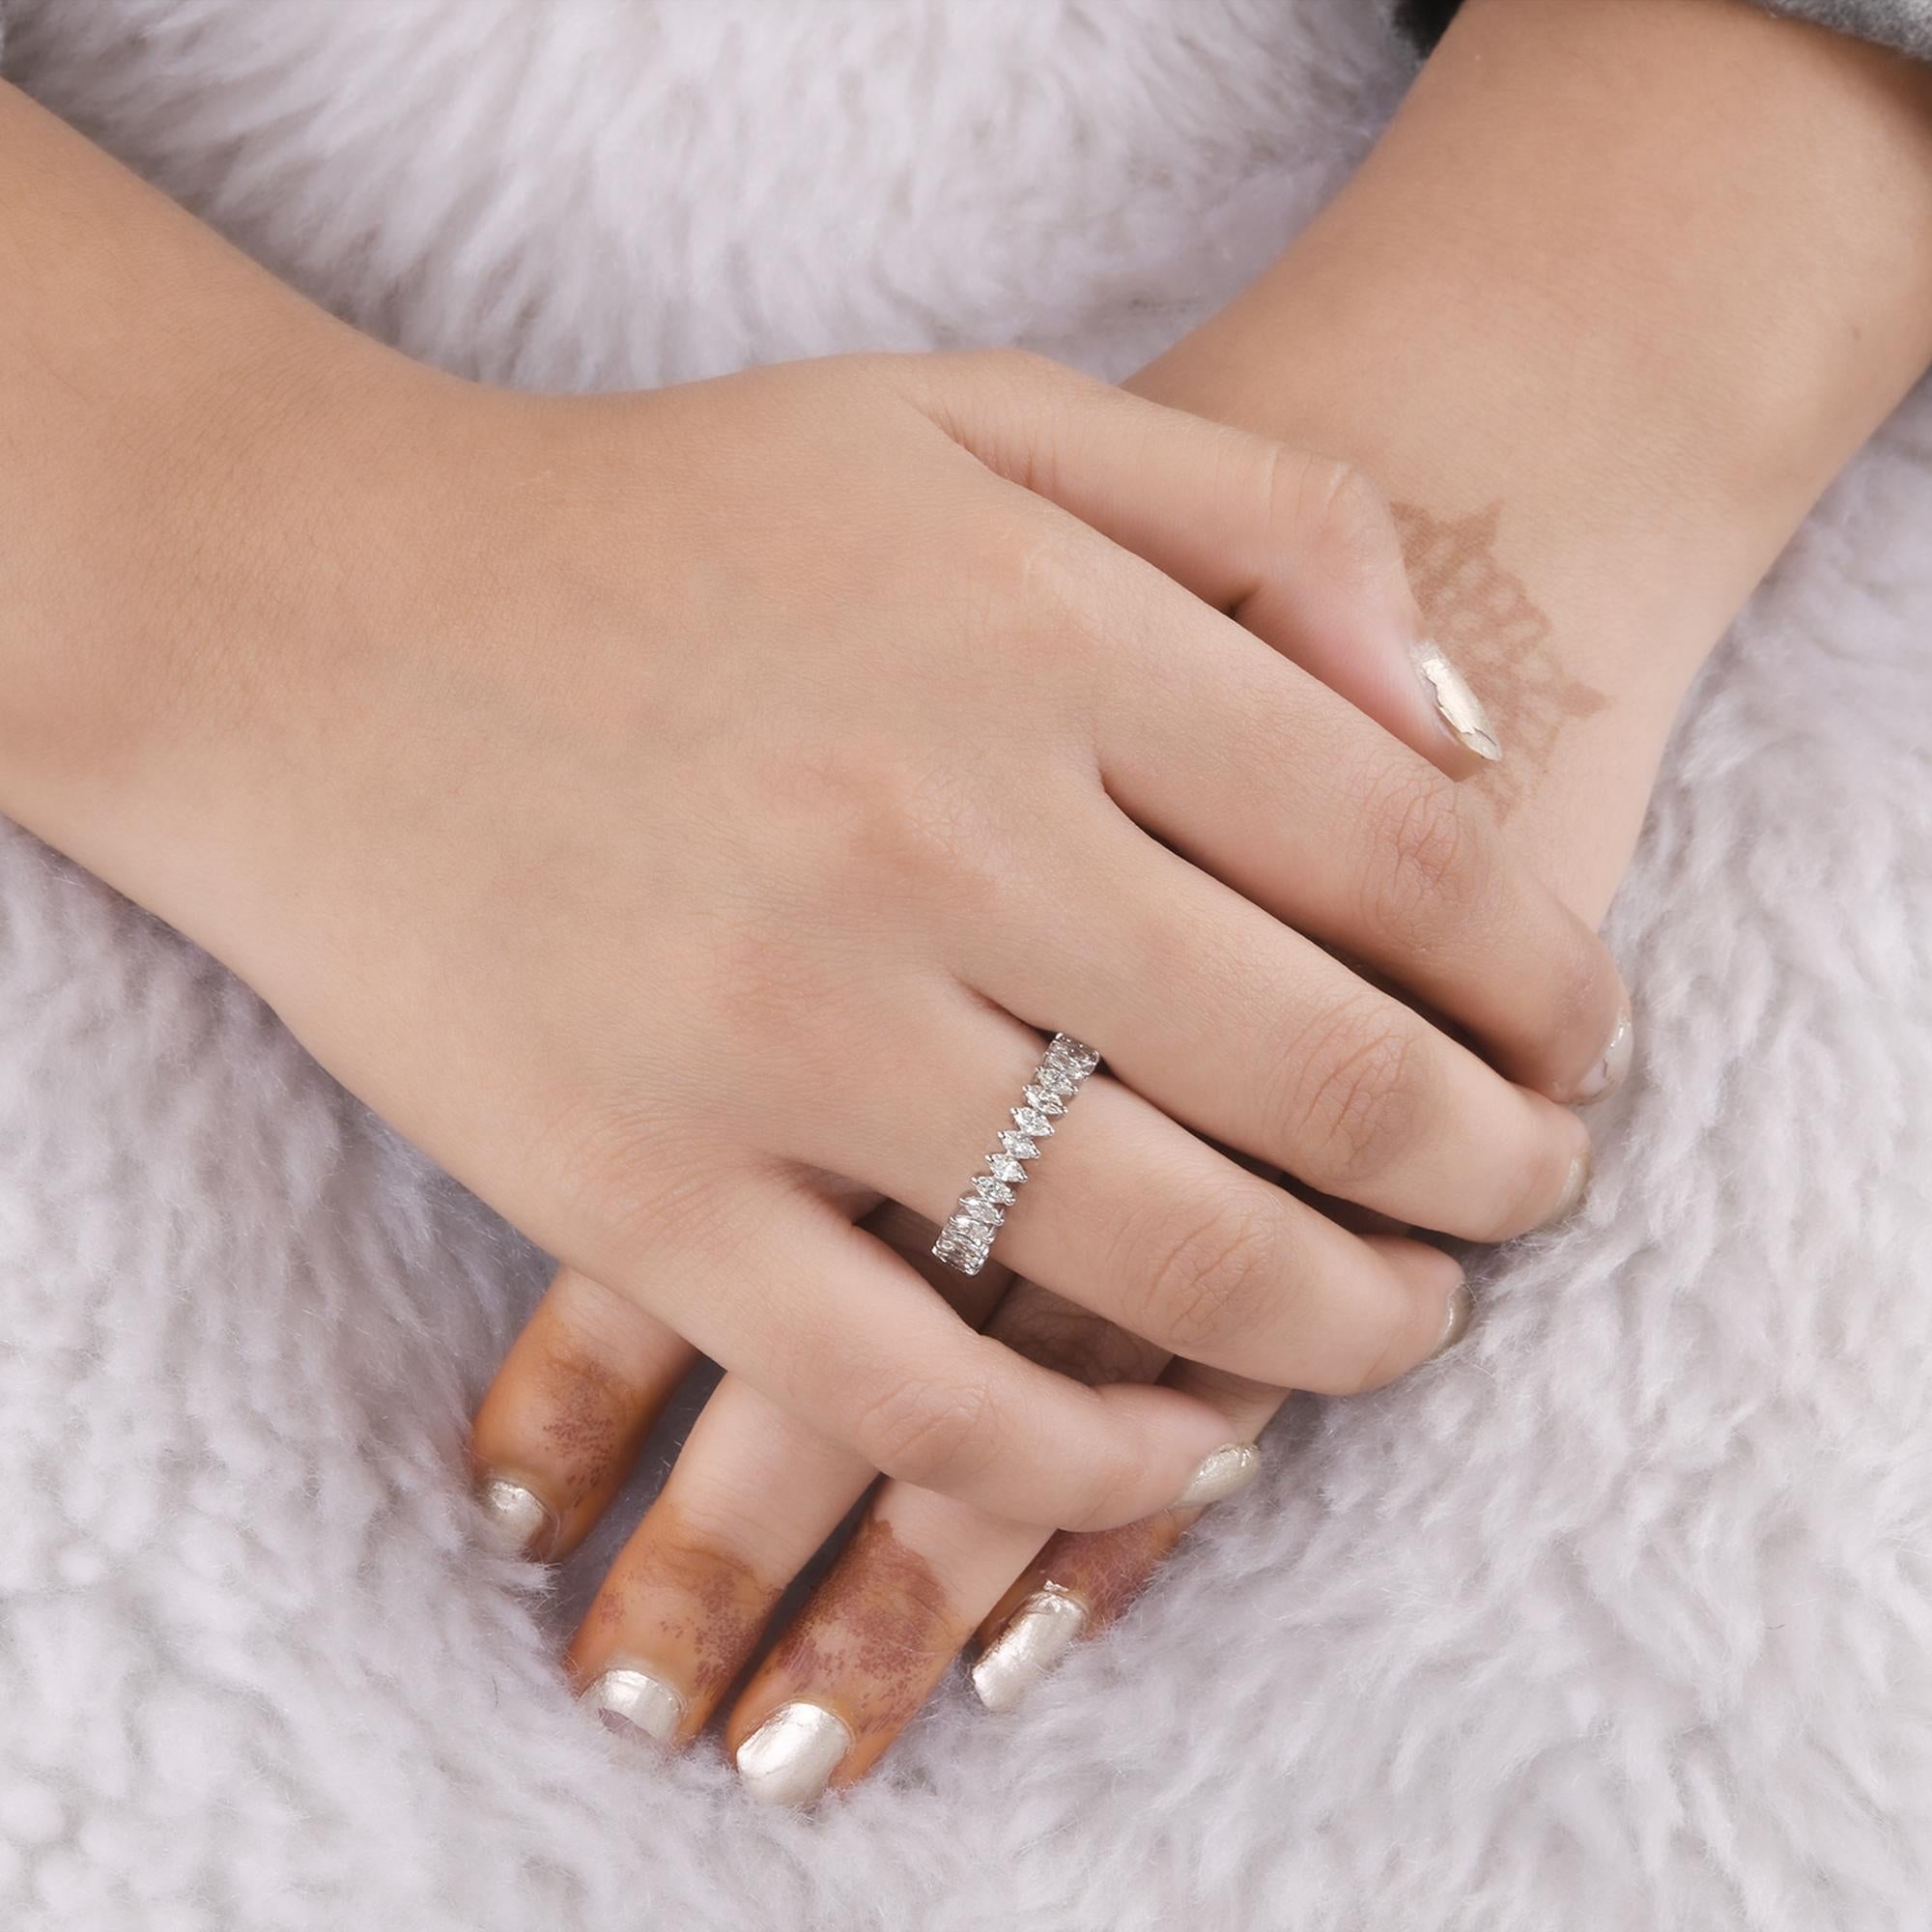 Women's 1.65 Carat Pear Shape Diamond Band Ring 14 Karat White Gold Handmade Jewelry For Sale